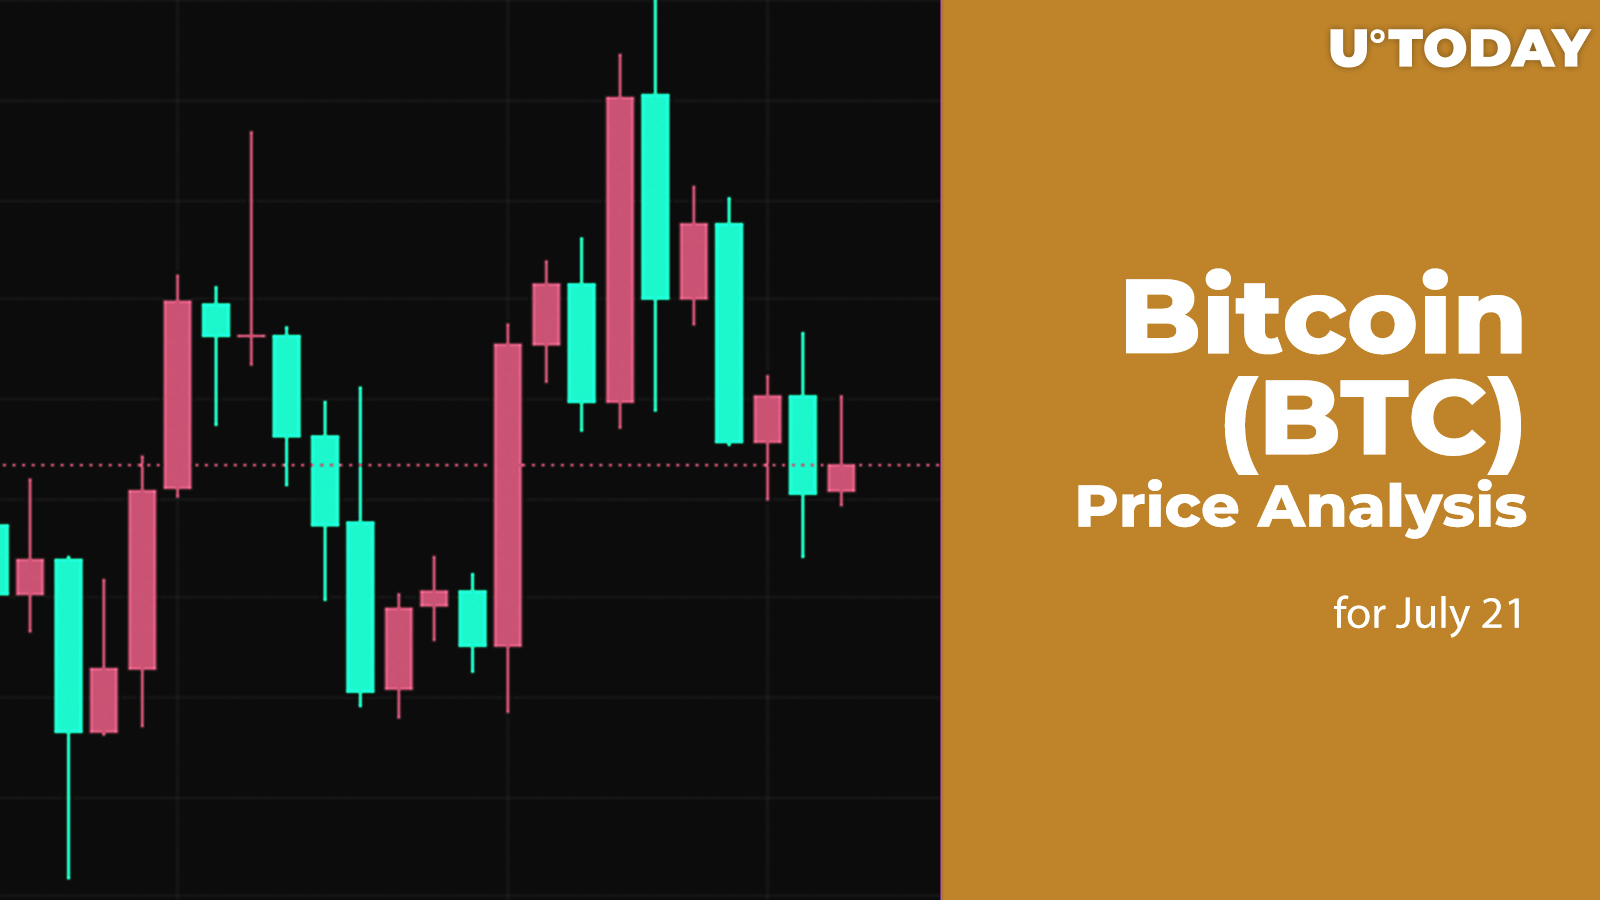 Bitcoin (BTC) Price Analysis for July 21